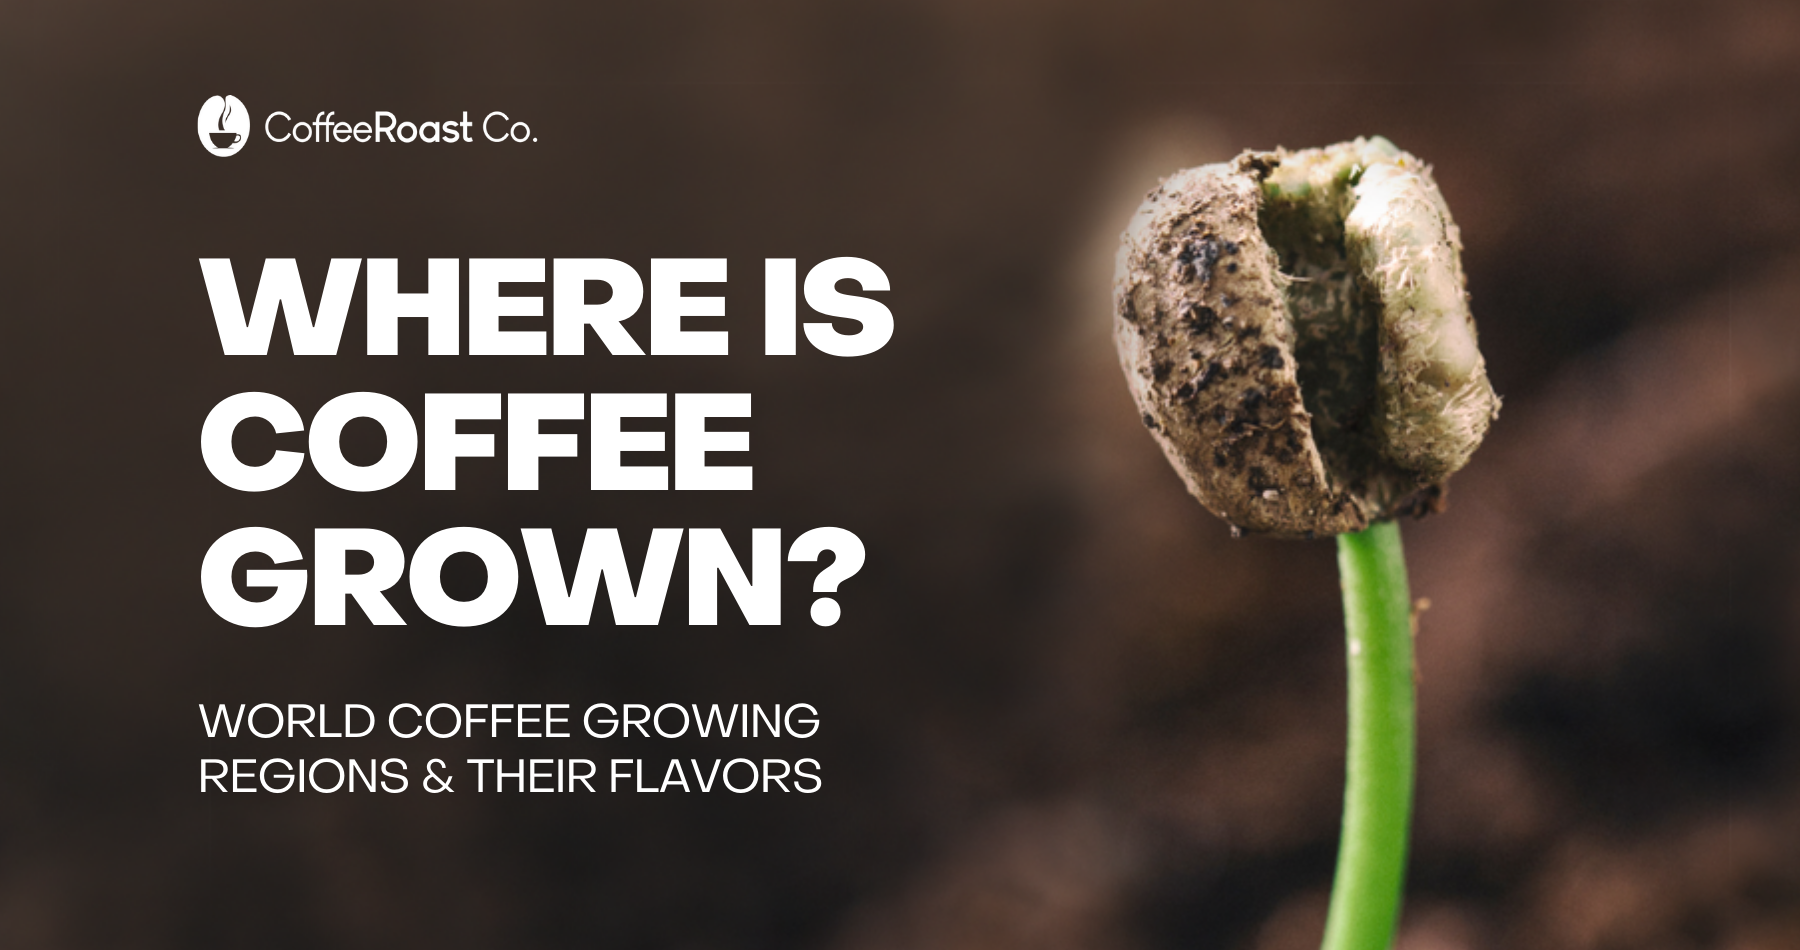 Where is Coffee Grown?